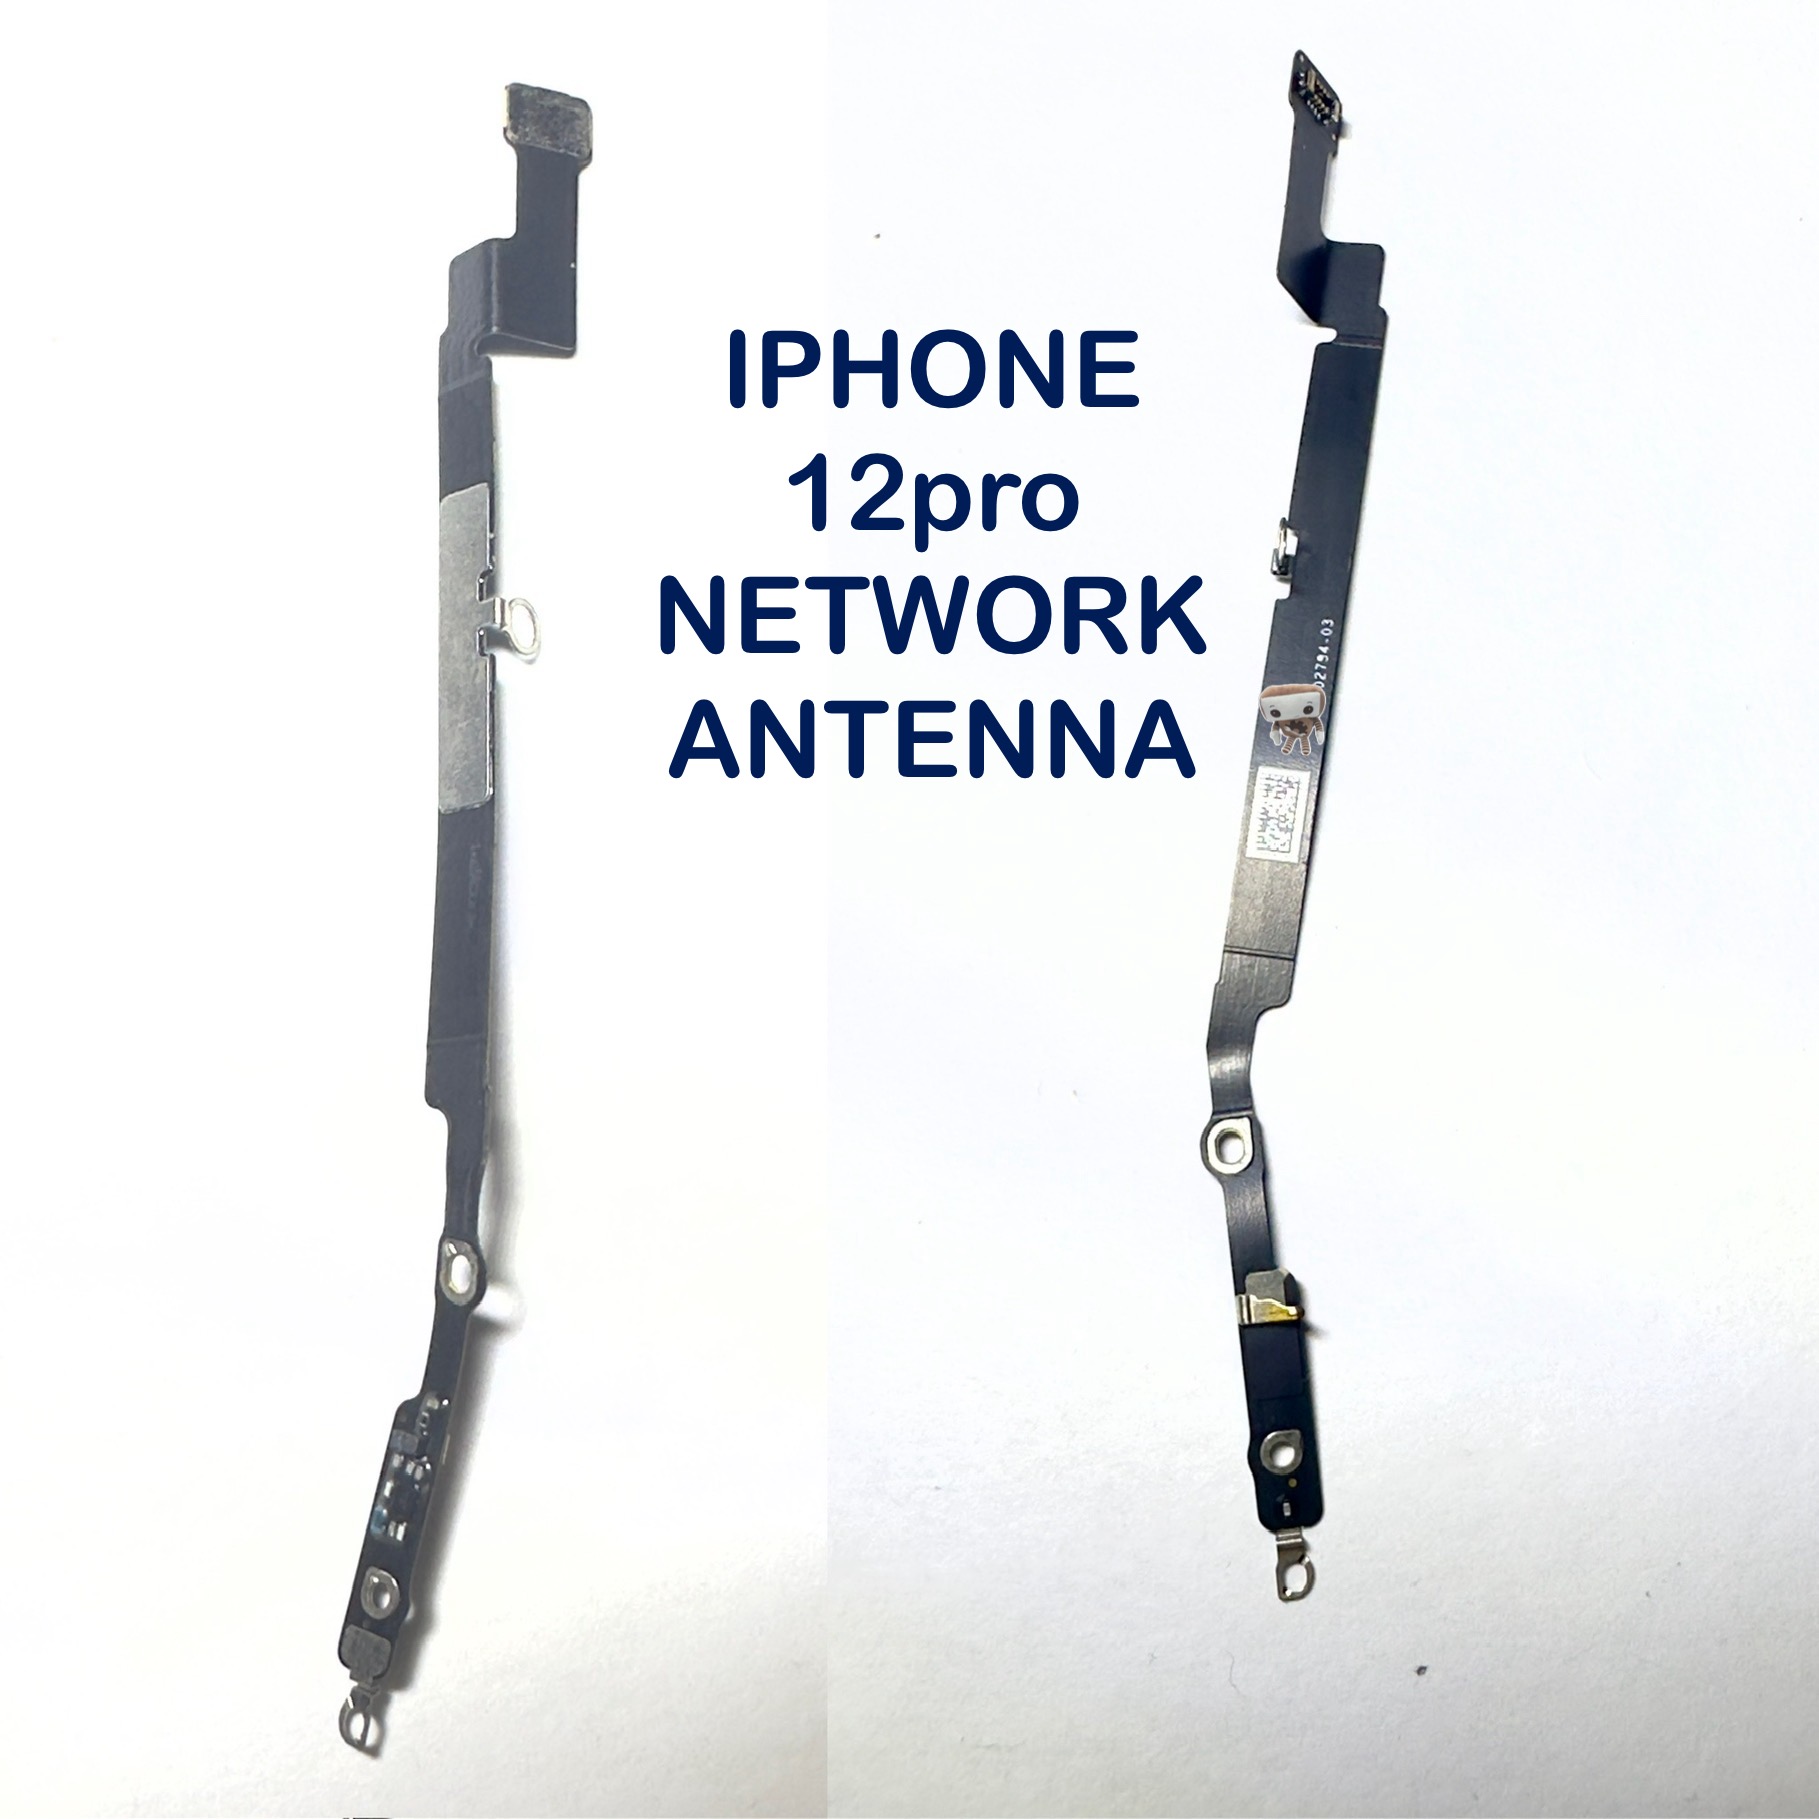 IPHONE 12pro NETWORK ANTENNA